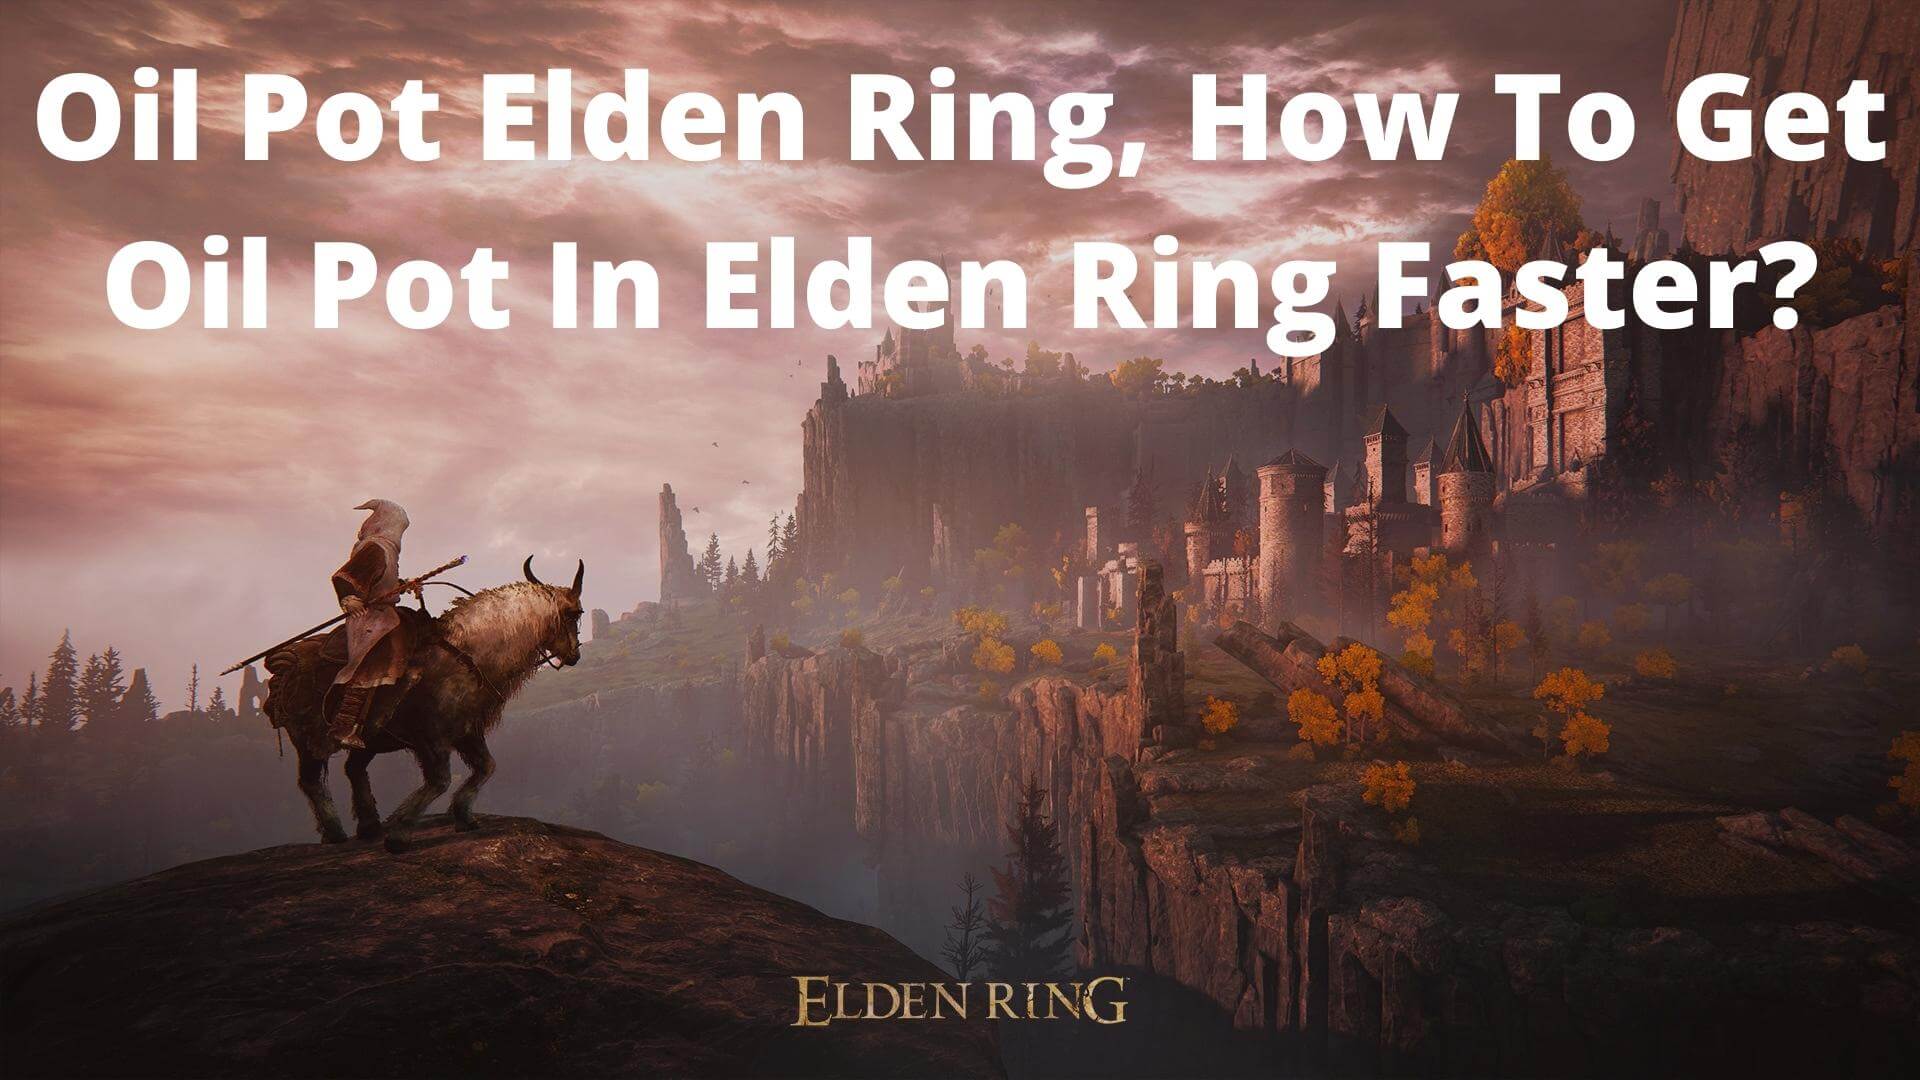 Oil Pot Elden Ring, How To Get Oil Pot In Elden Ring Faster? » Amazfeed